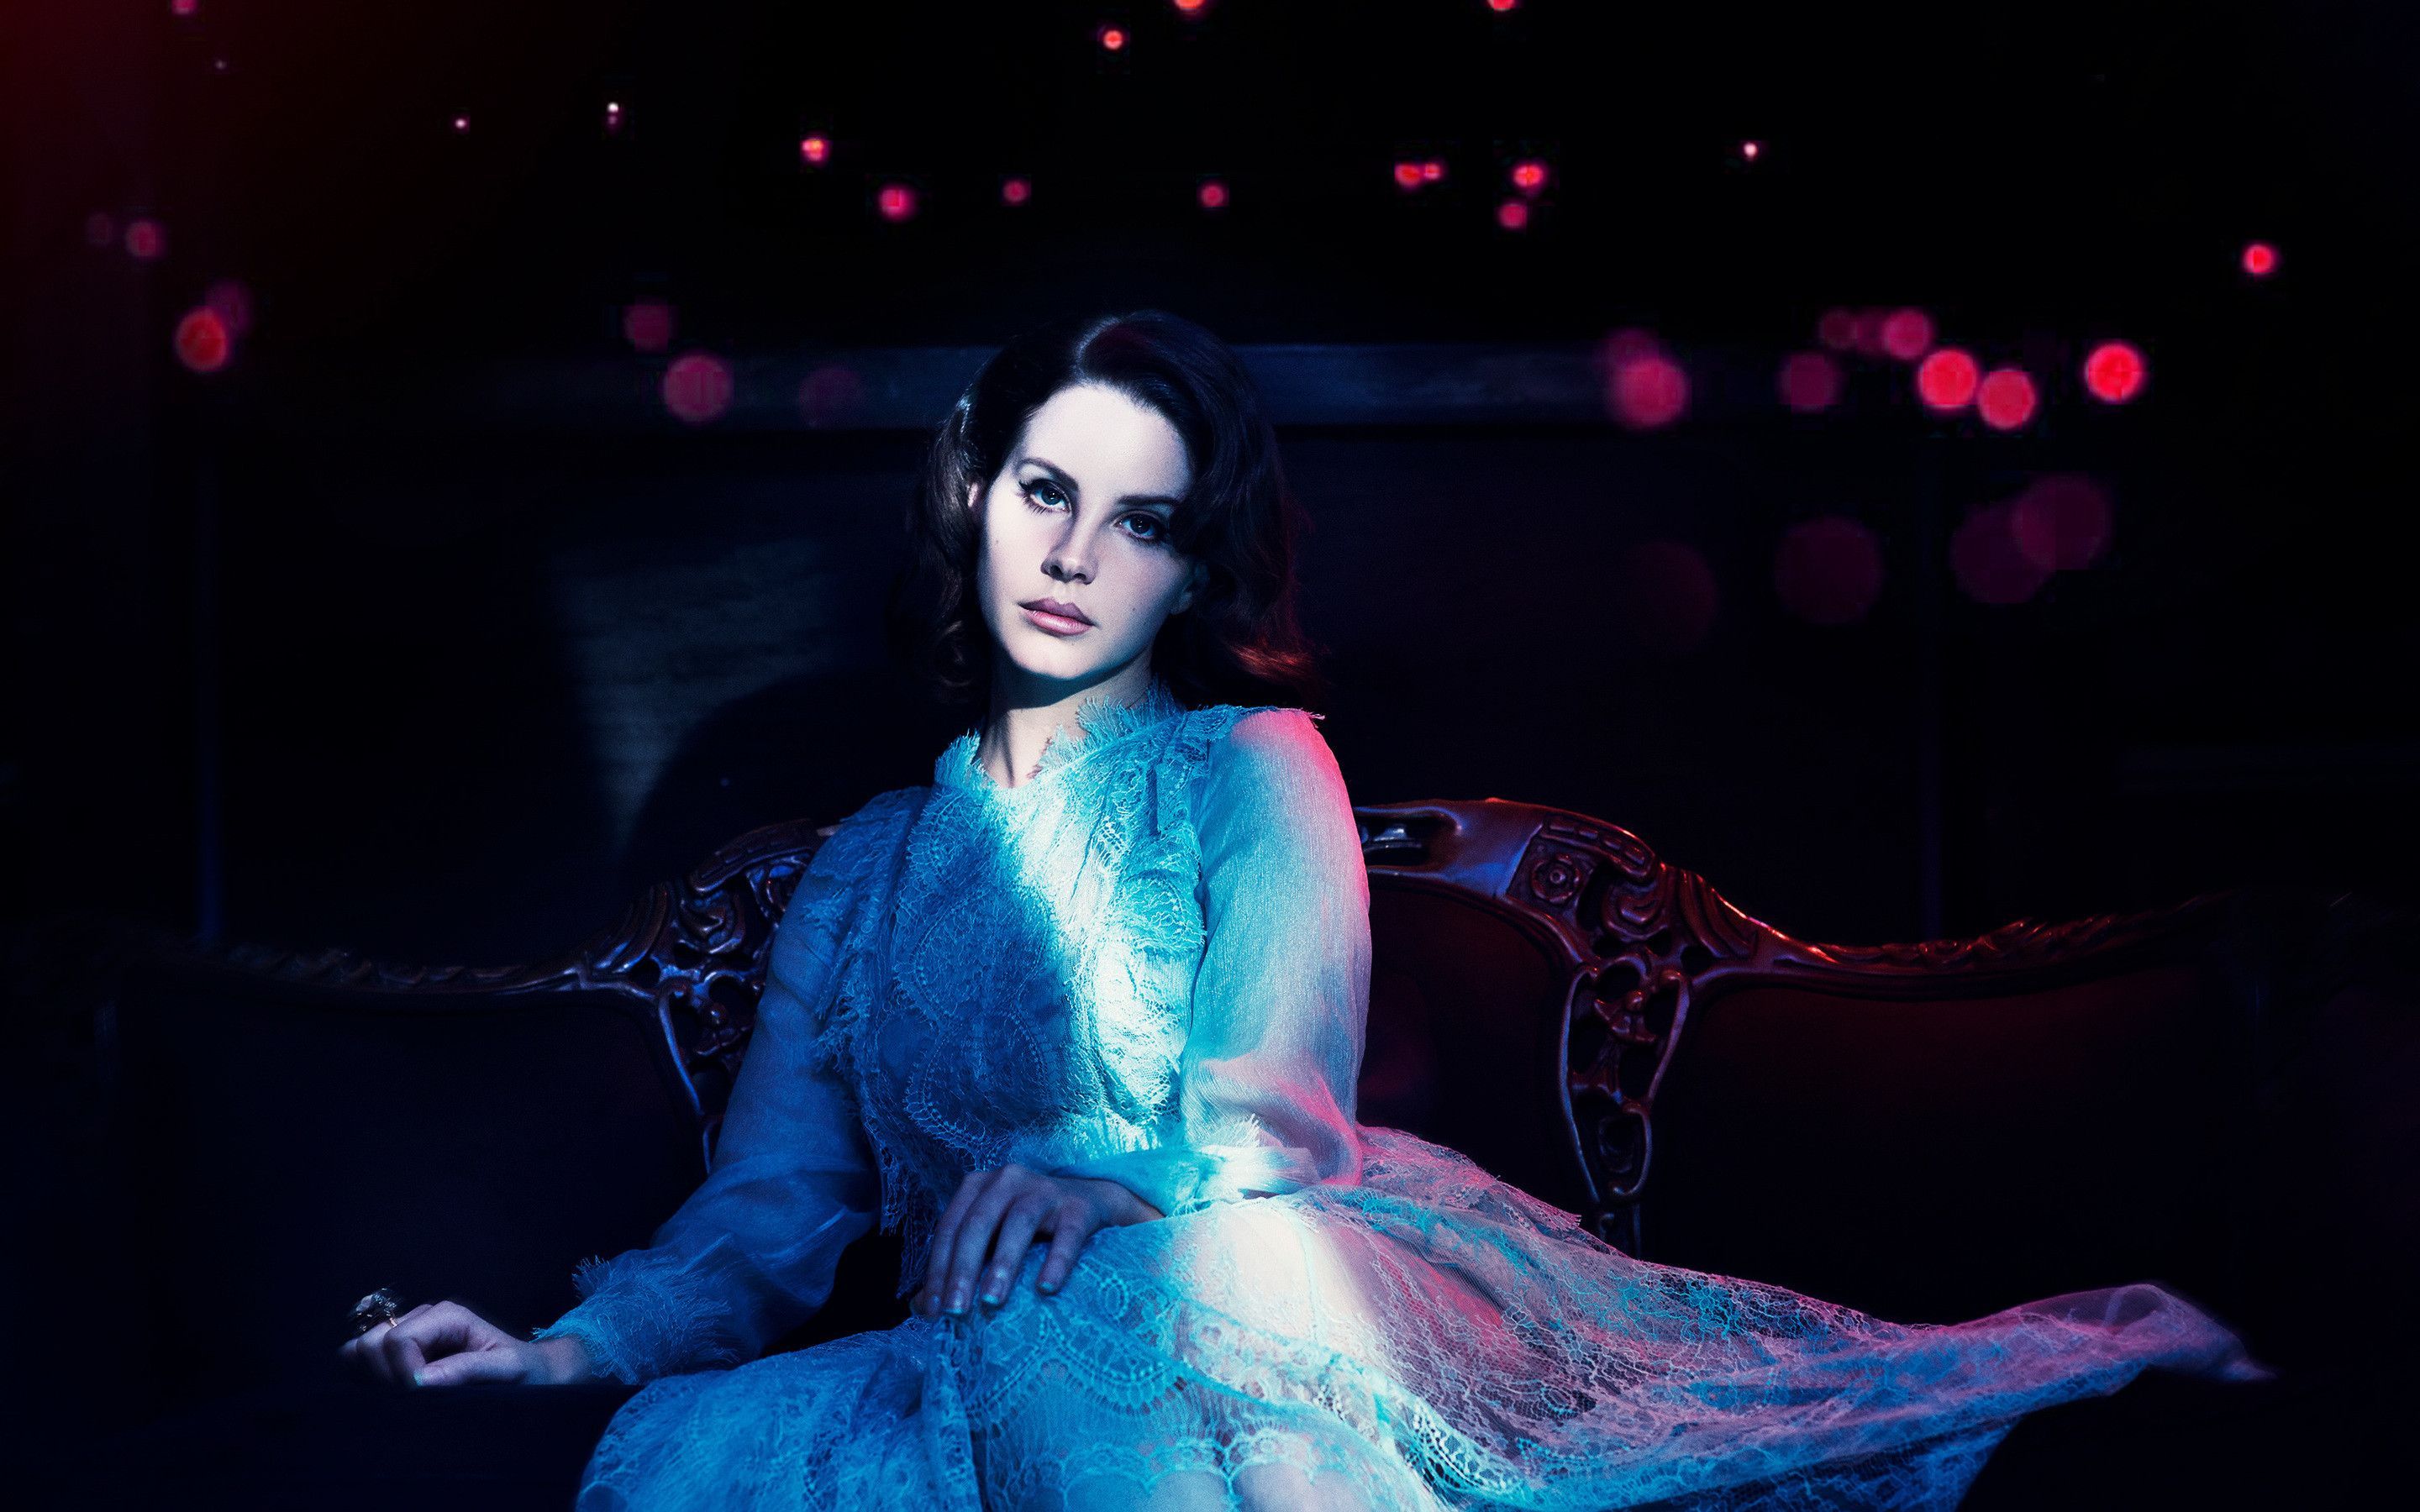 Lana Del Rey Complex Magazine Photohoot Macbook Pro Retina HD 4k Wallpaper, Image, Background, Photo and Picture